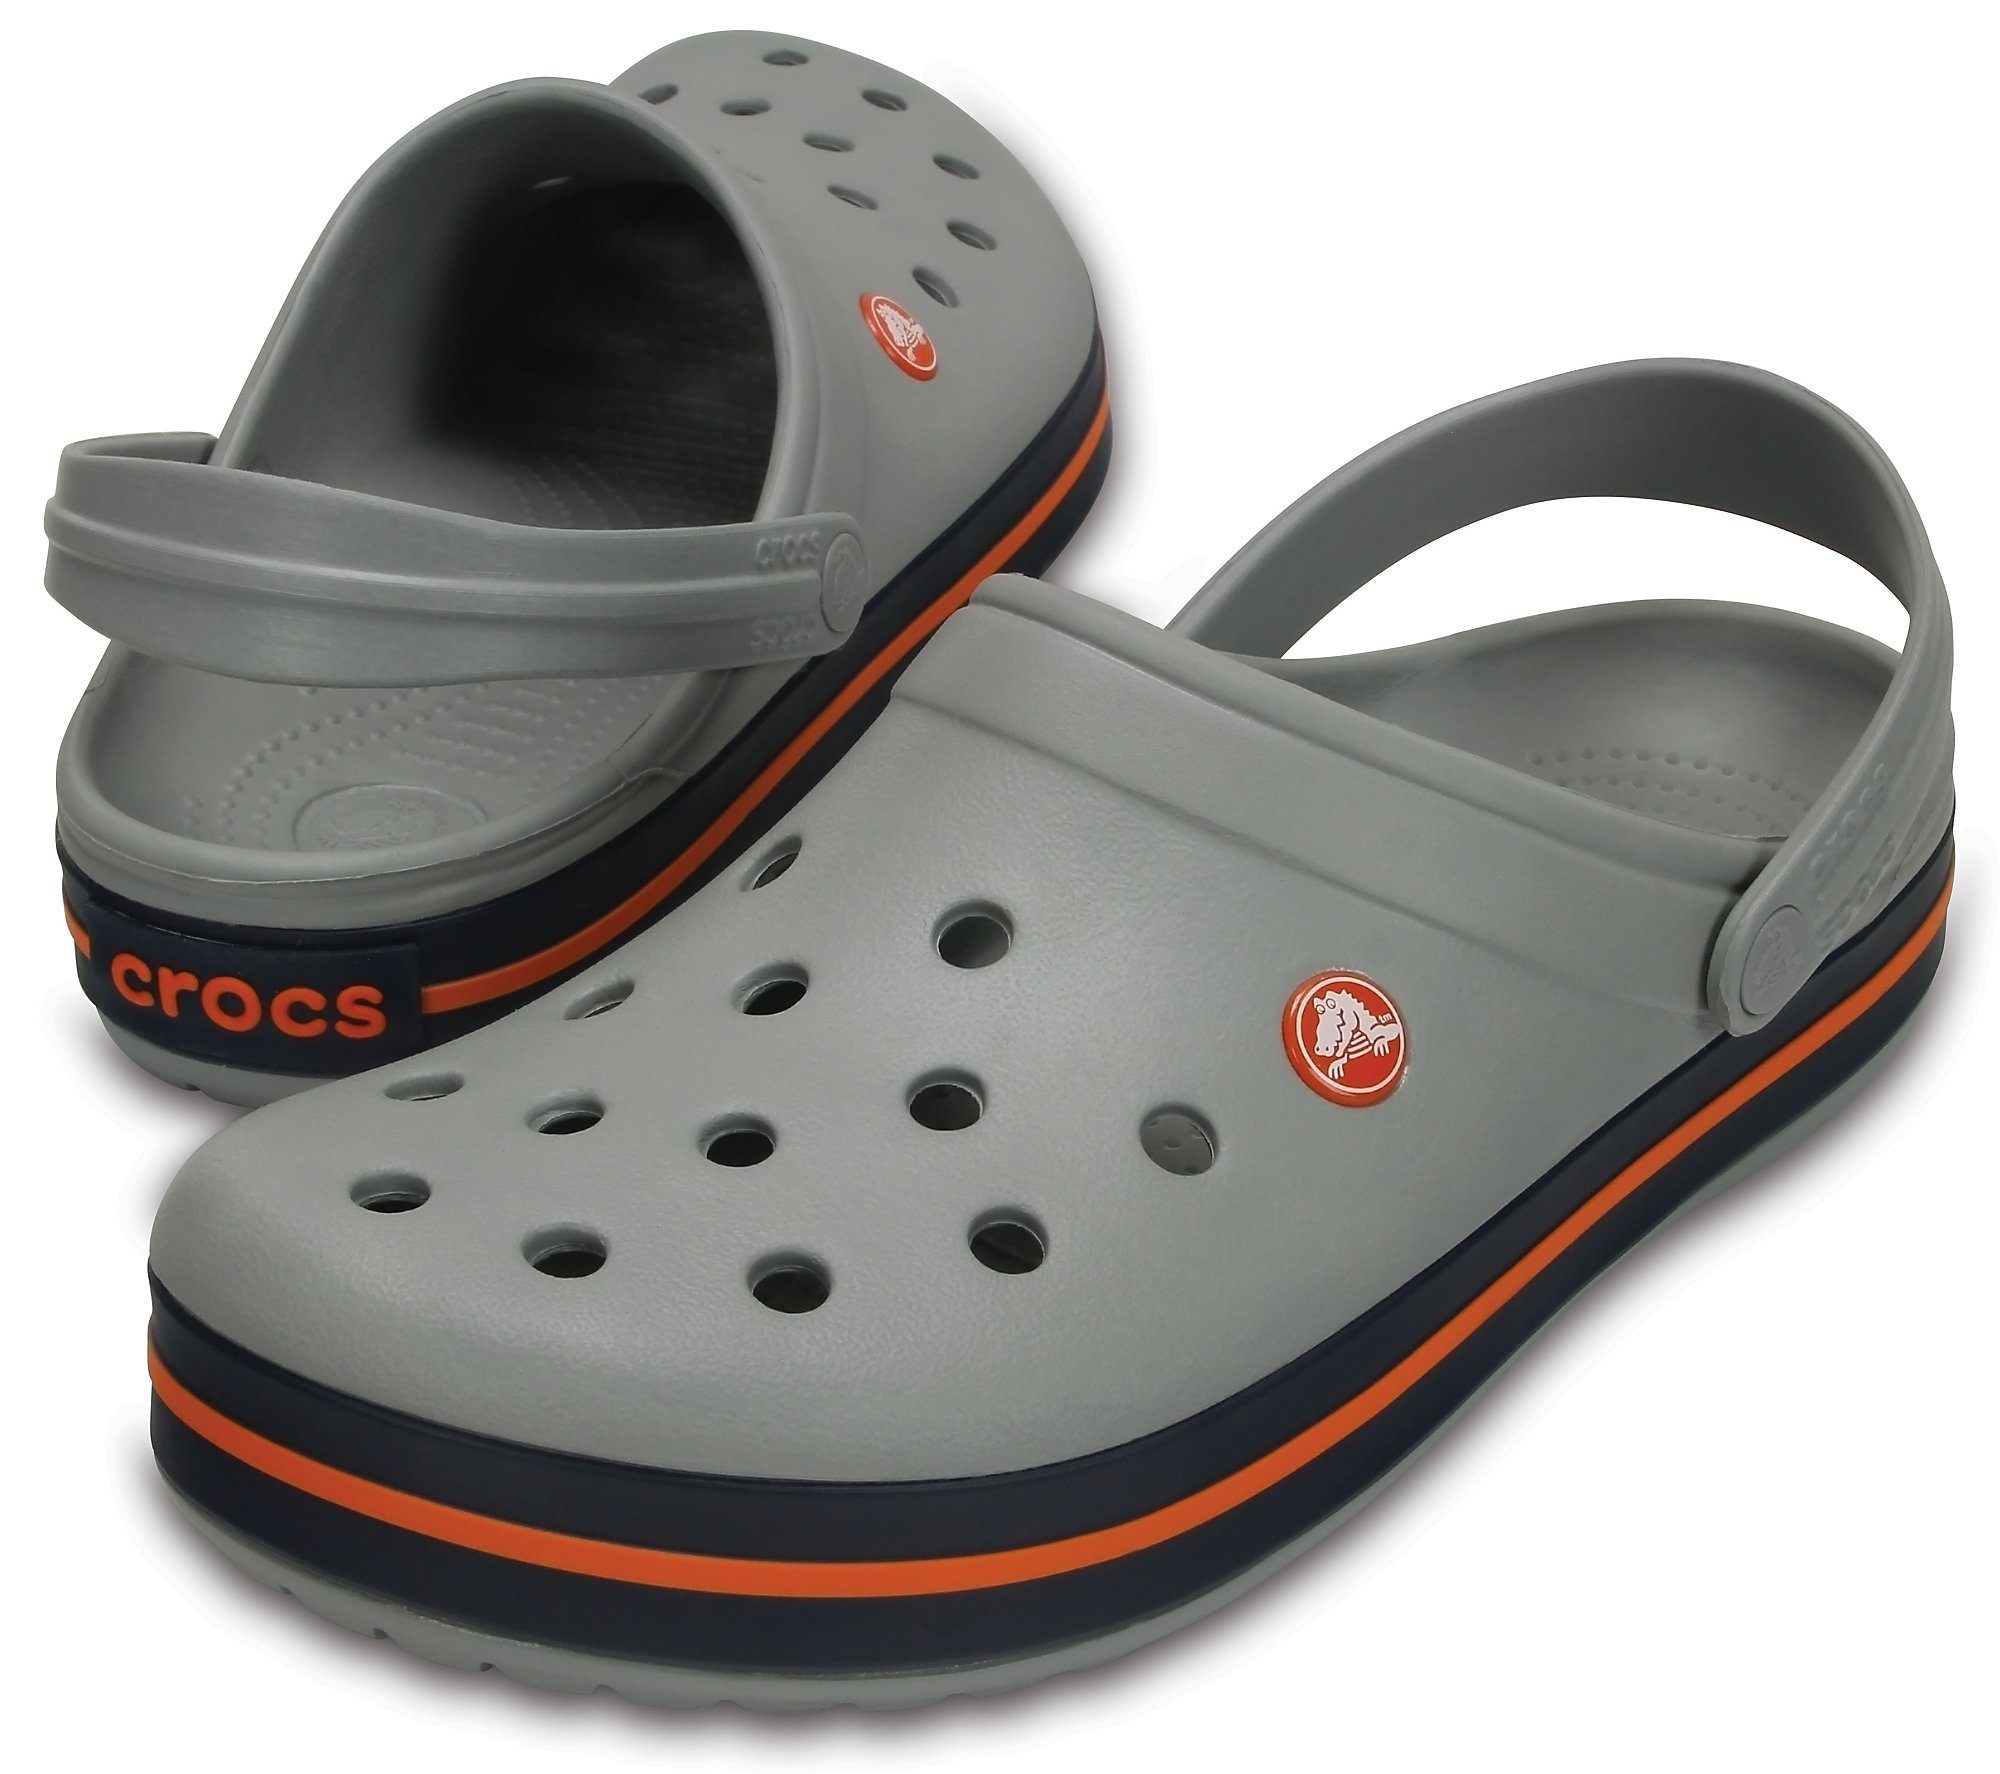 Crocs Laufsohle grau-schwarz-orange farbiger mit Clog Crocband